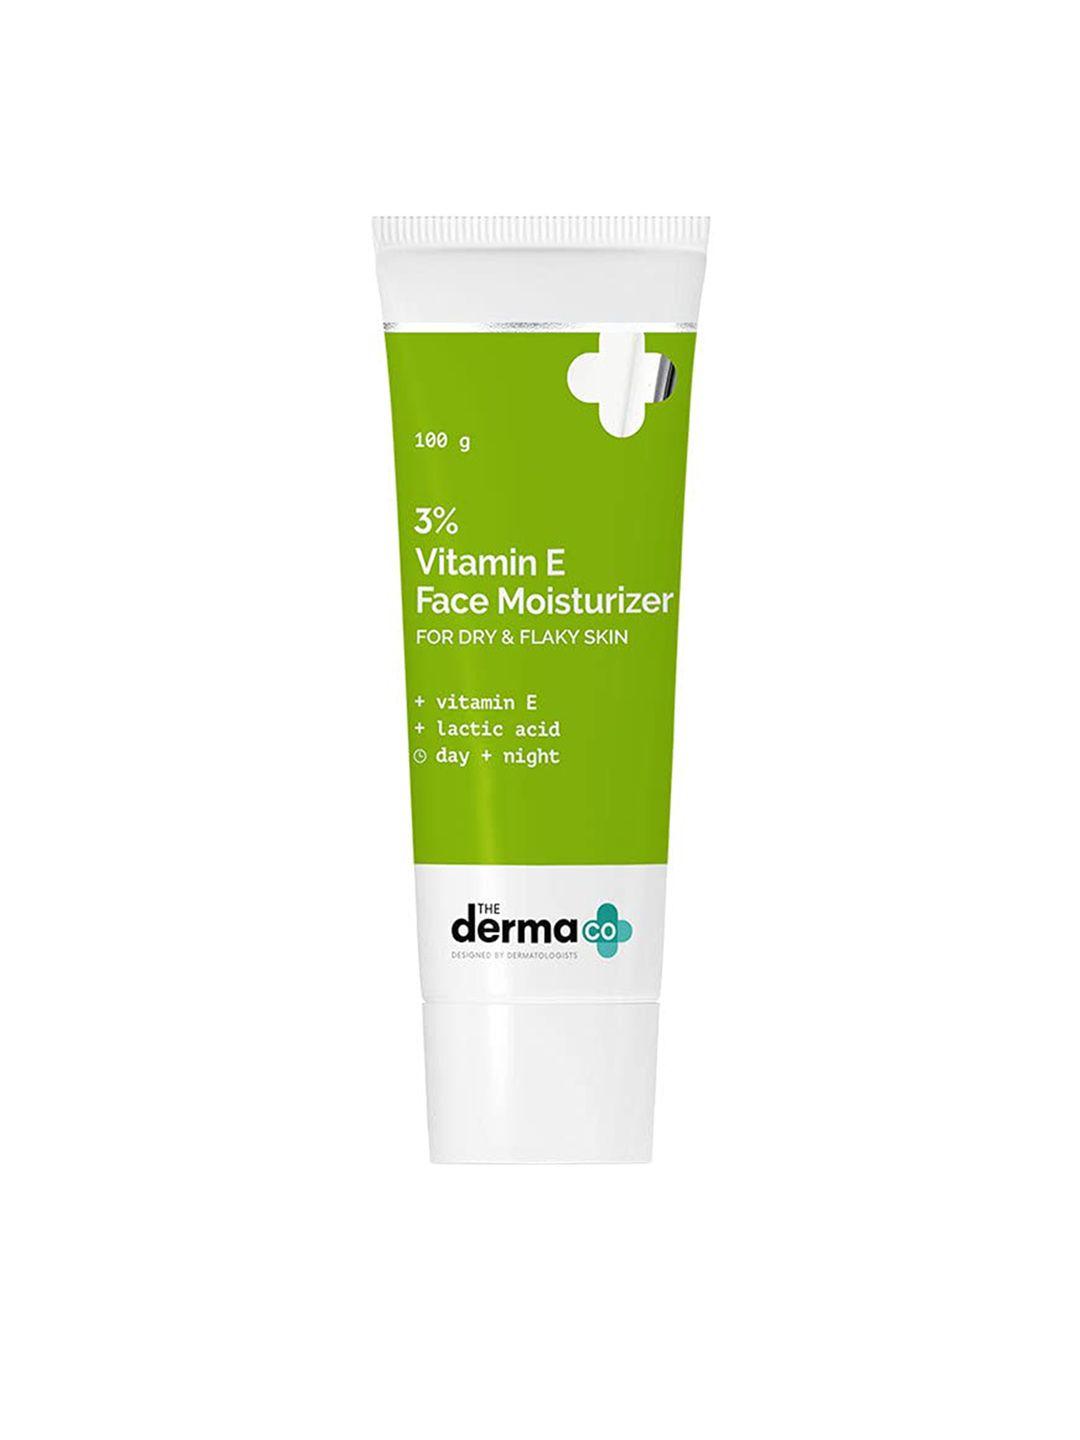 the derma co. 3% vitamin e moisturizer with vitamin e & lactic acid for dry & flaky skin